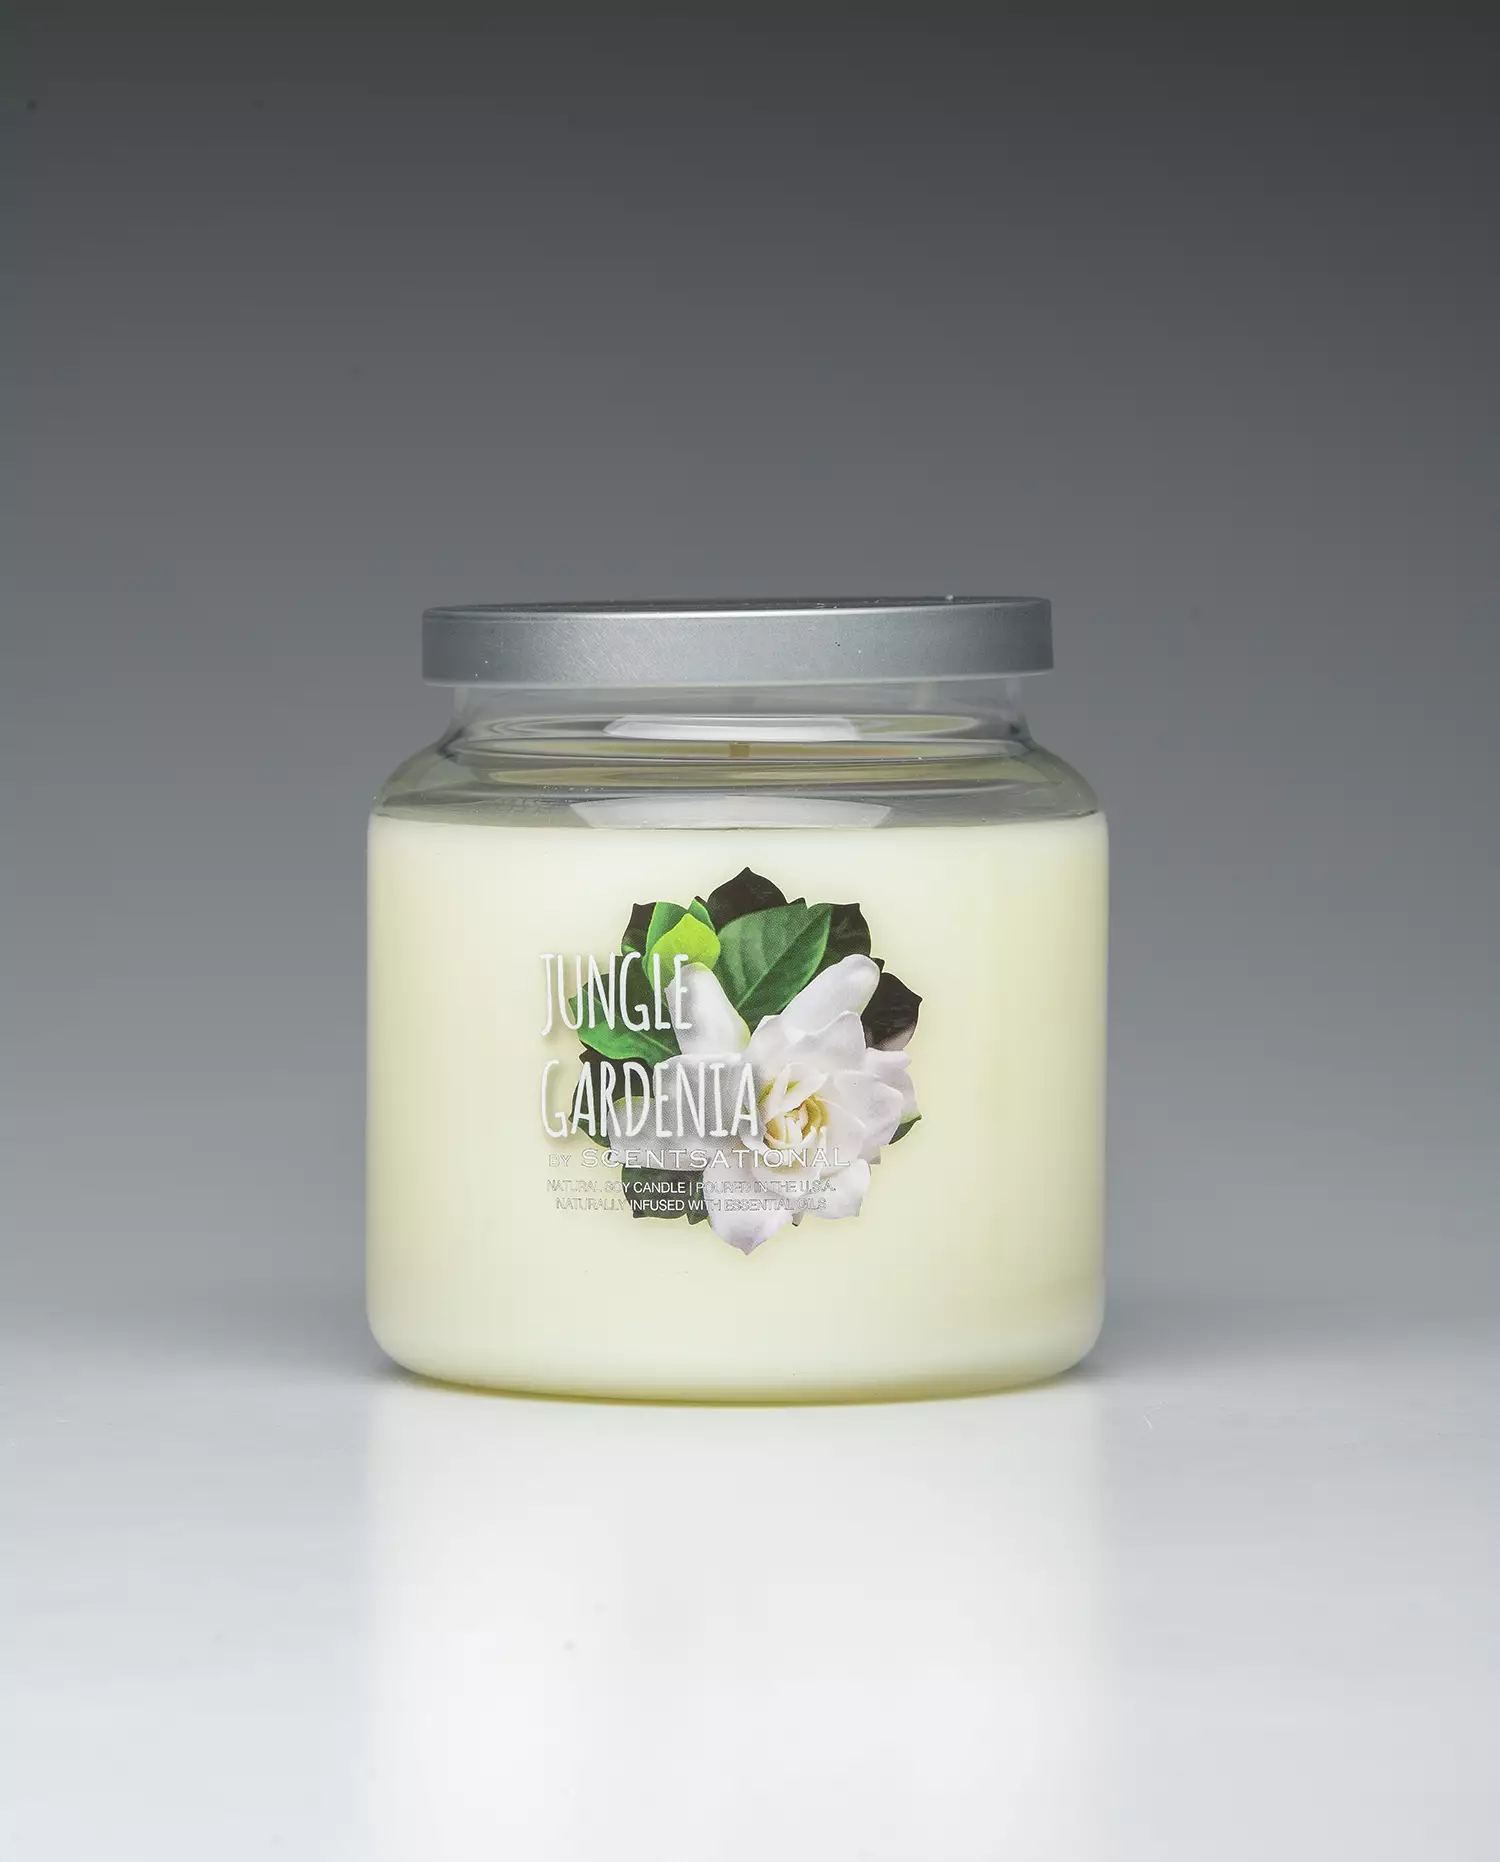 CLEAN LINEN Fragrance 14 oz. Scentsational Natural Soy Candle